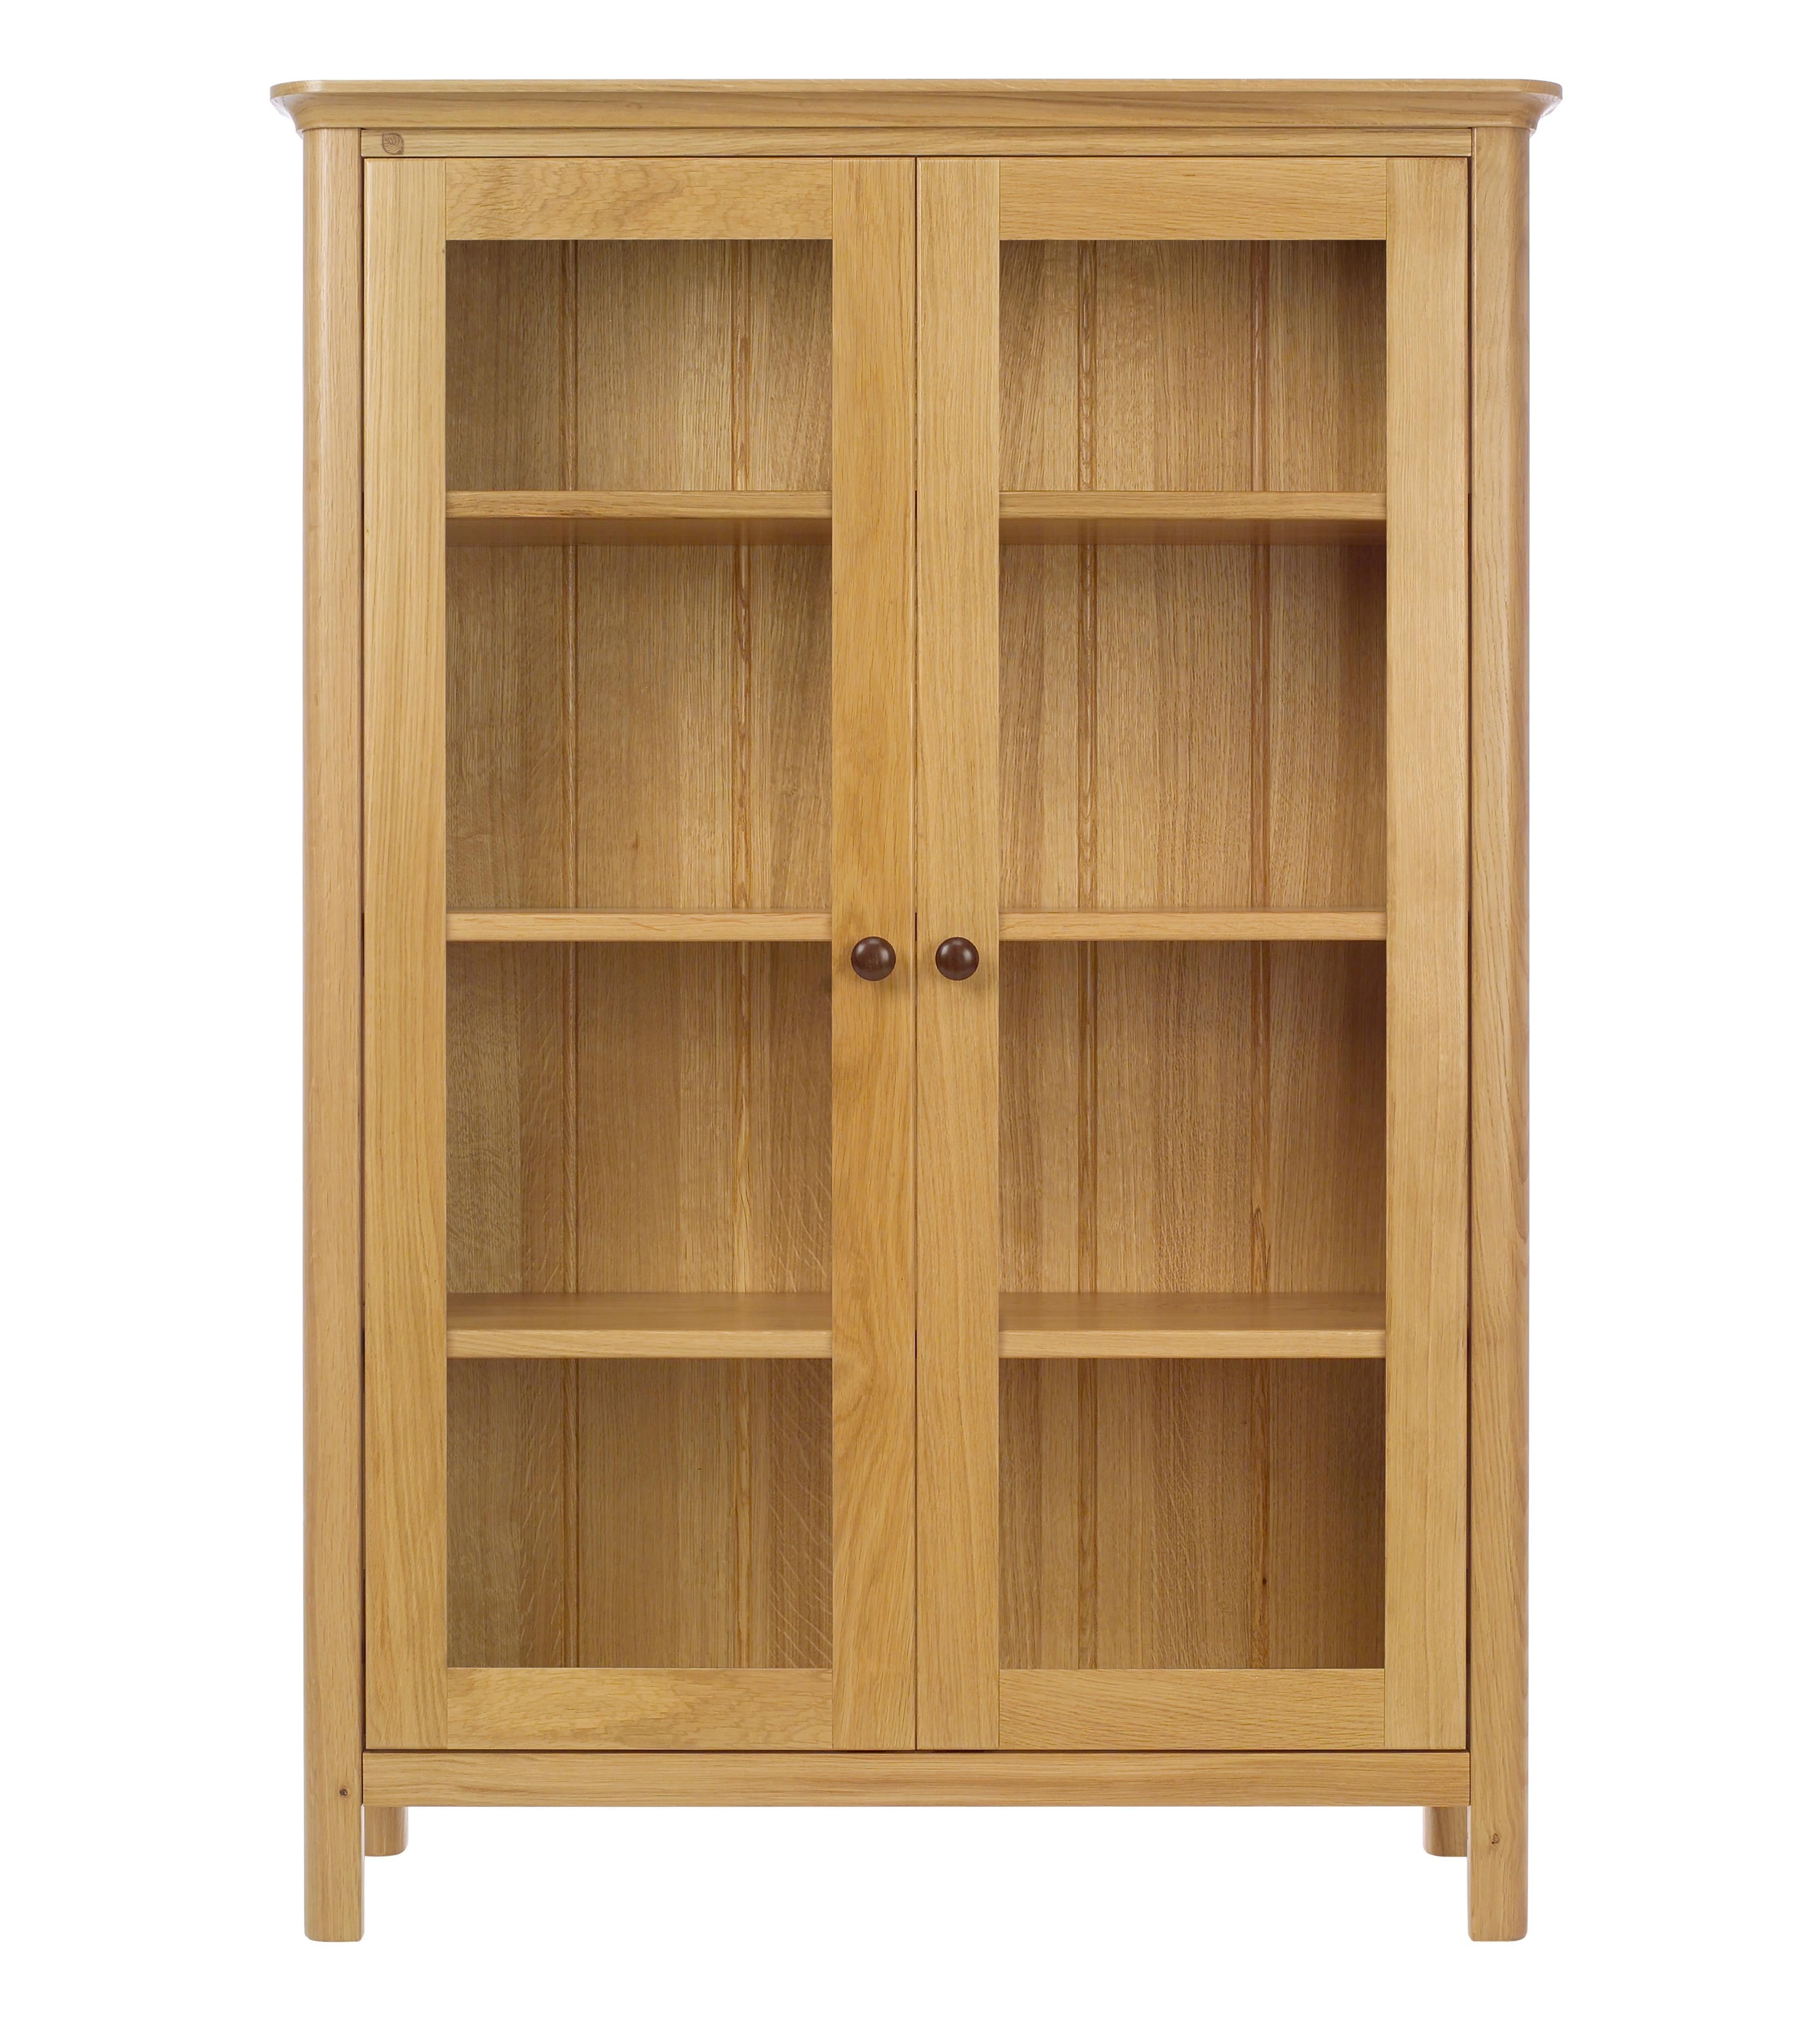 Oak Bookcases With Doors Oak Bookshelves With Glass Doors Small Regarding Oak Bookshelves (View 8 of 15)